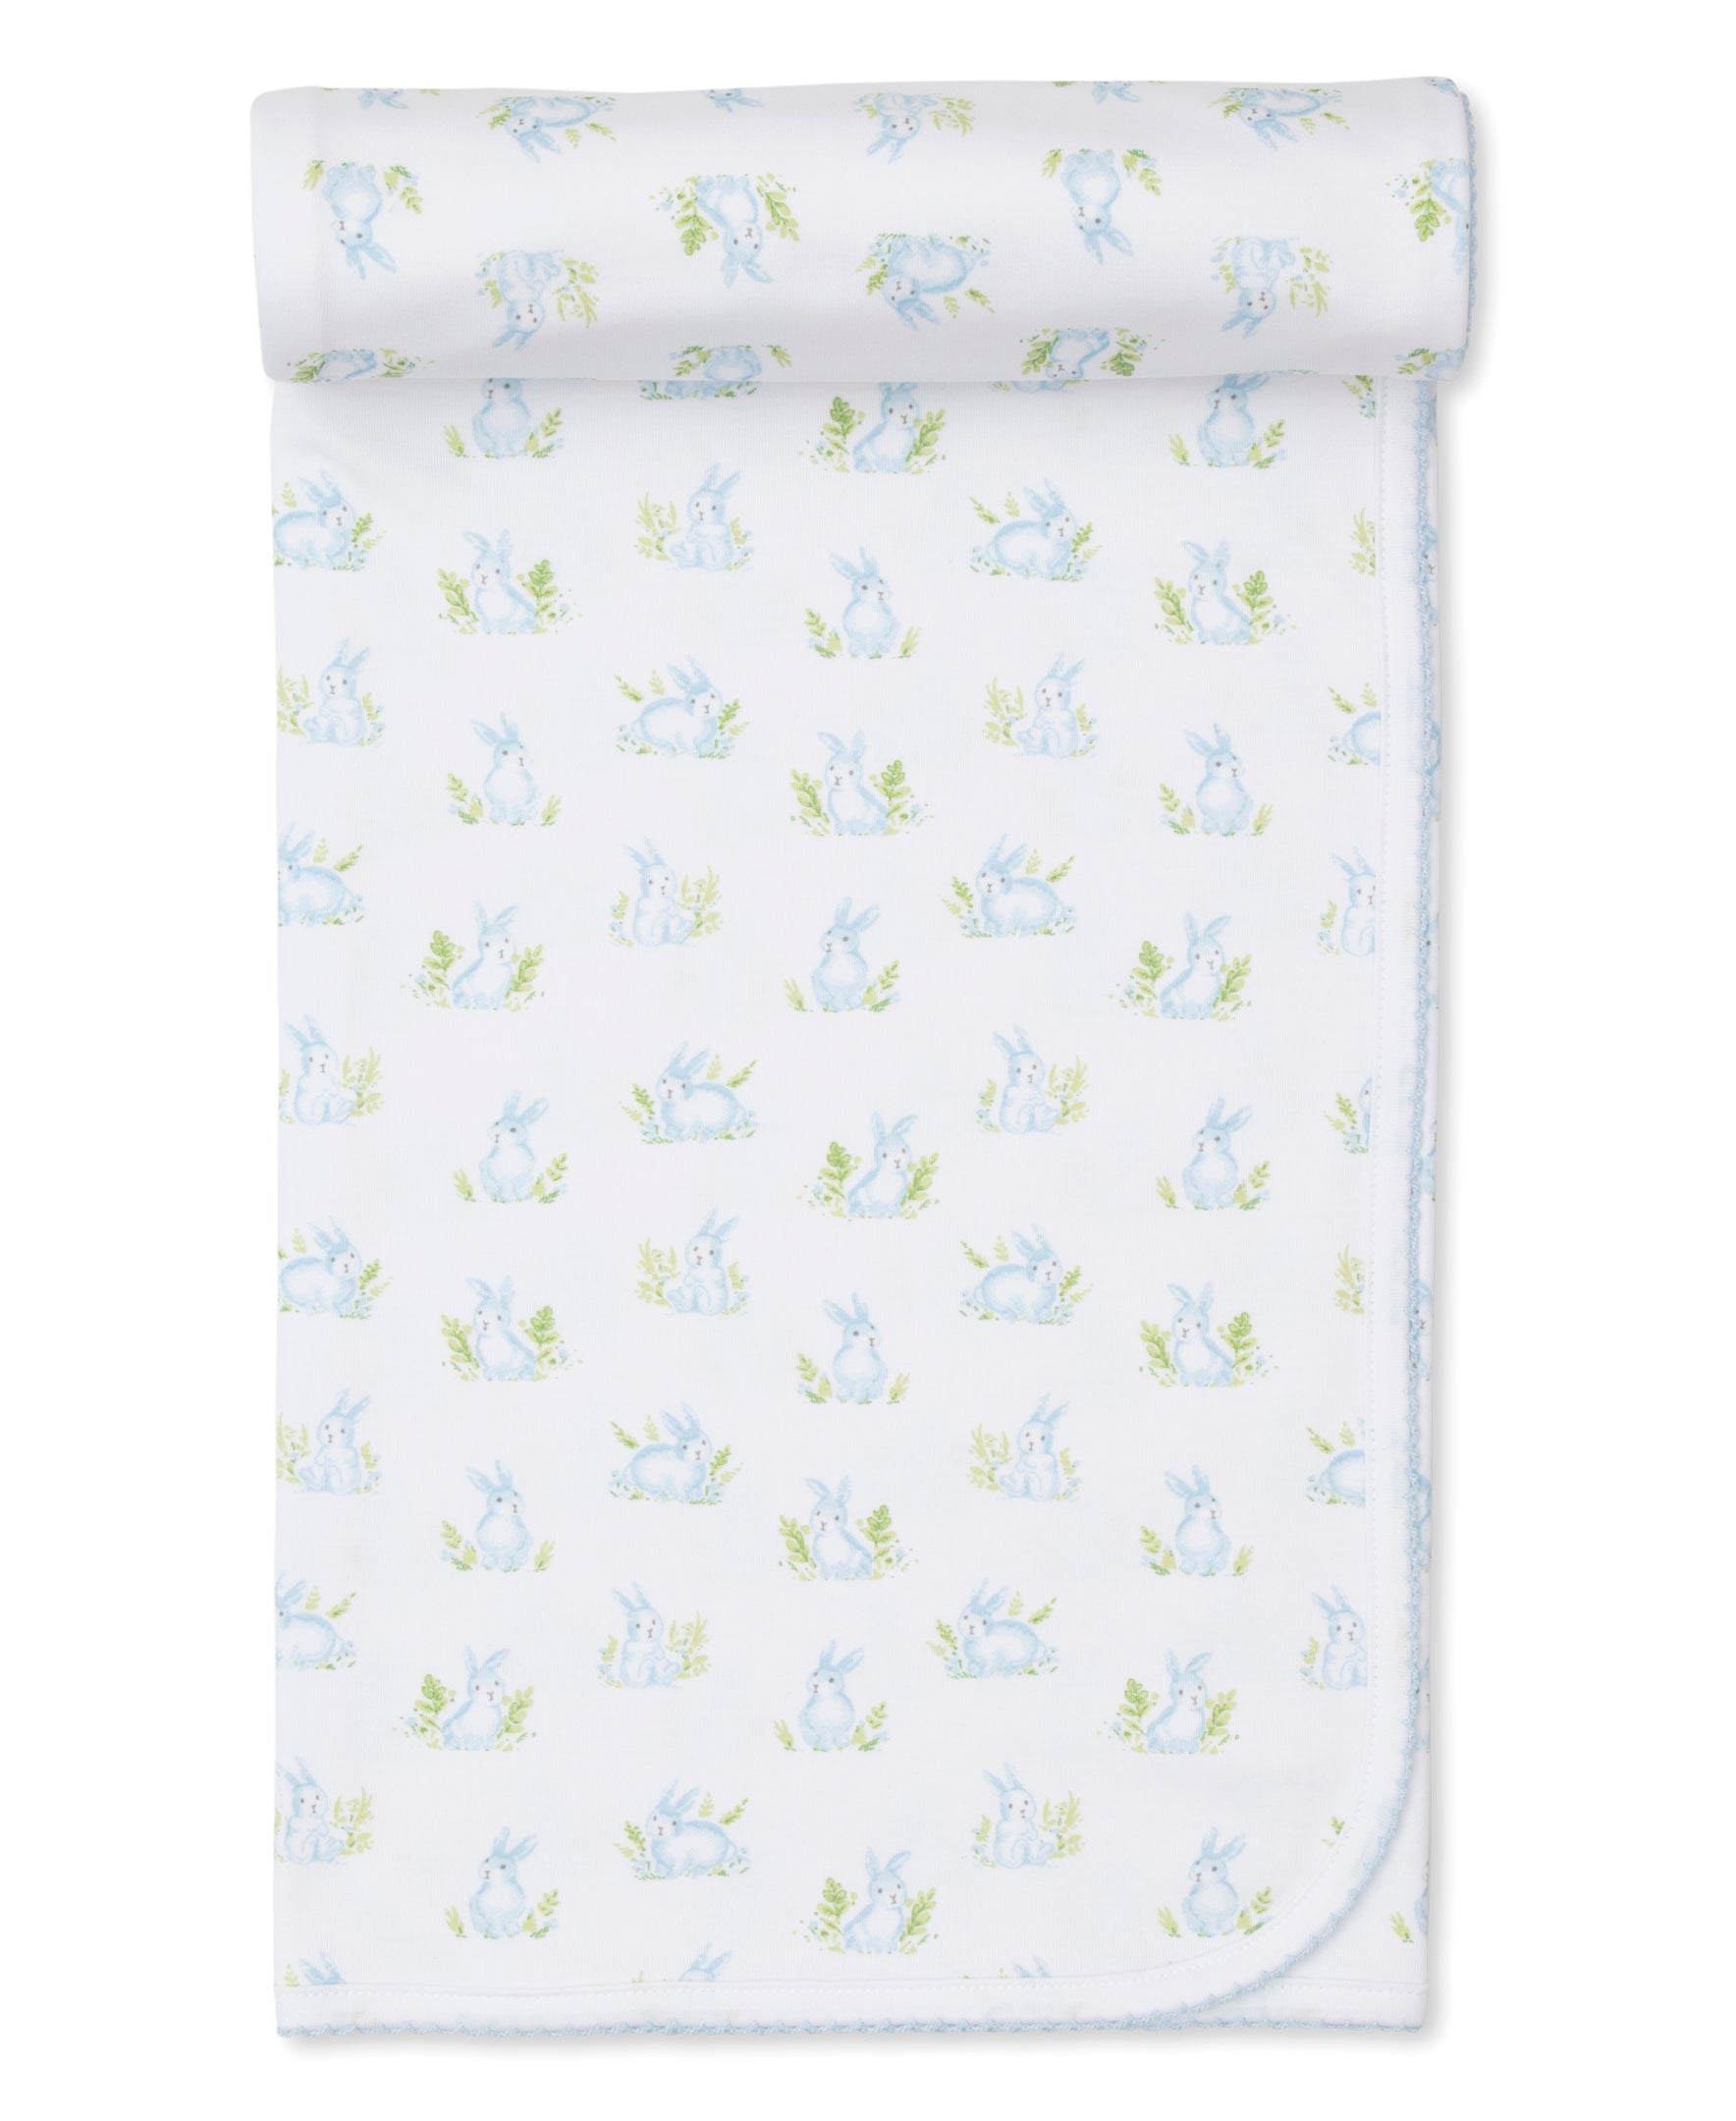 Cottontail Hollows: Light Blue Bunnies Print Blanket